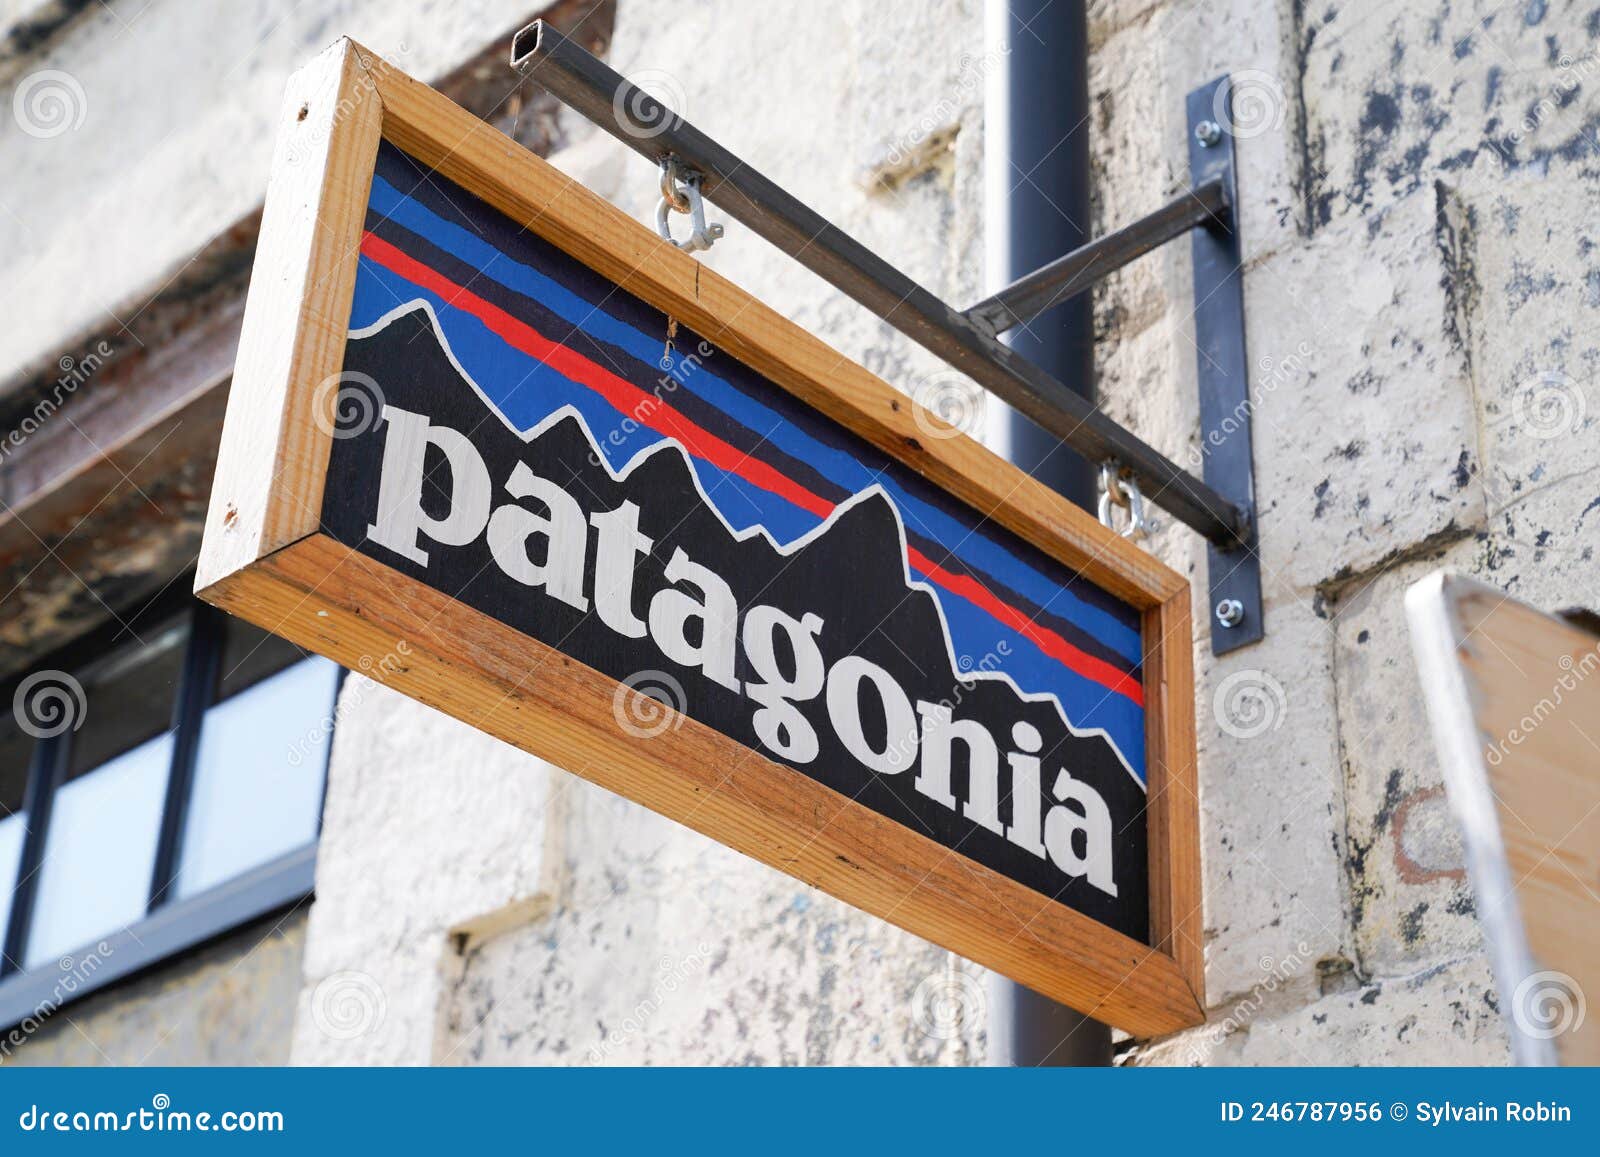 Patagonia Brand and Text Sign on Facade Shop Clothes Entrance Store Editorial Photo - Image of logo, facades: 246787956